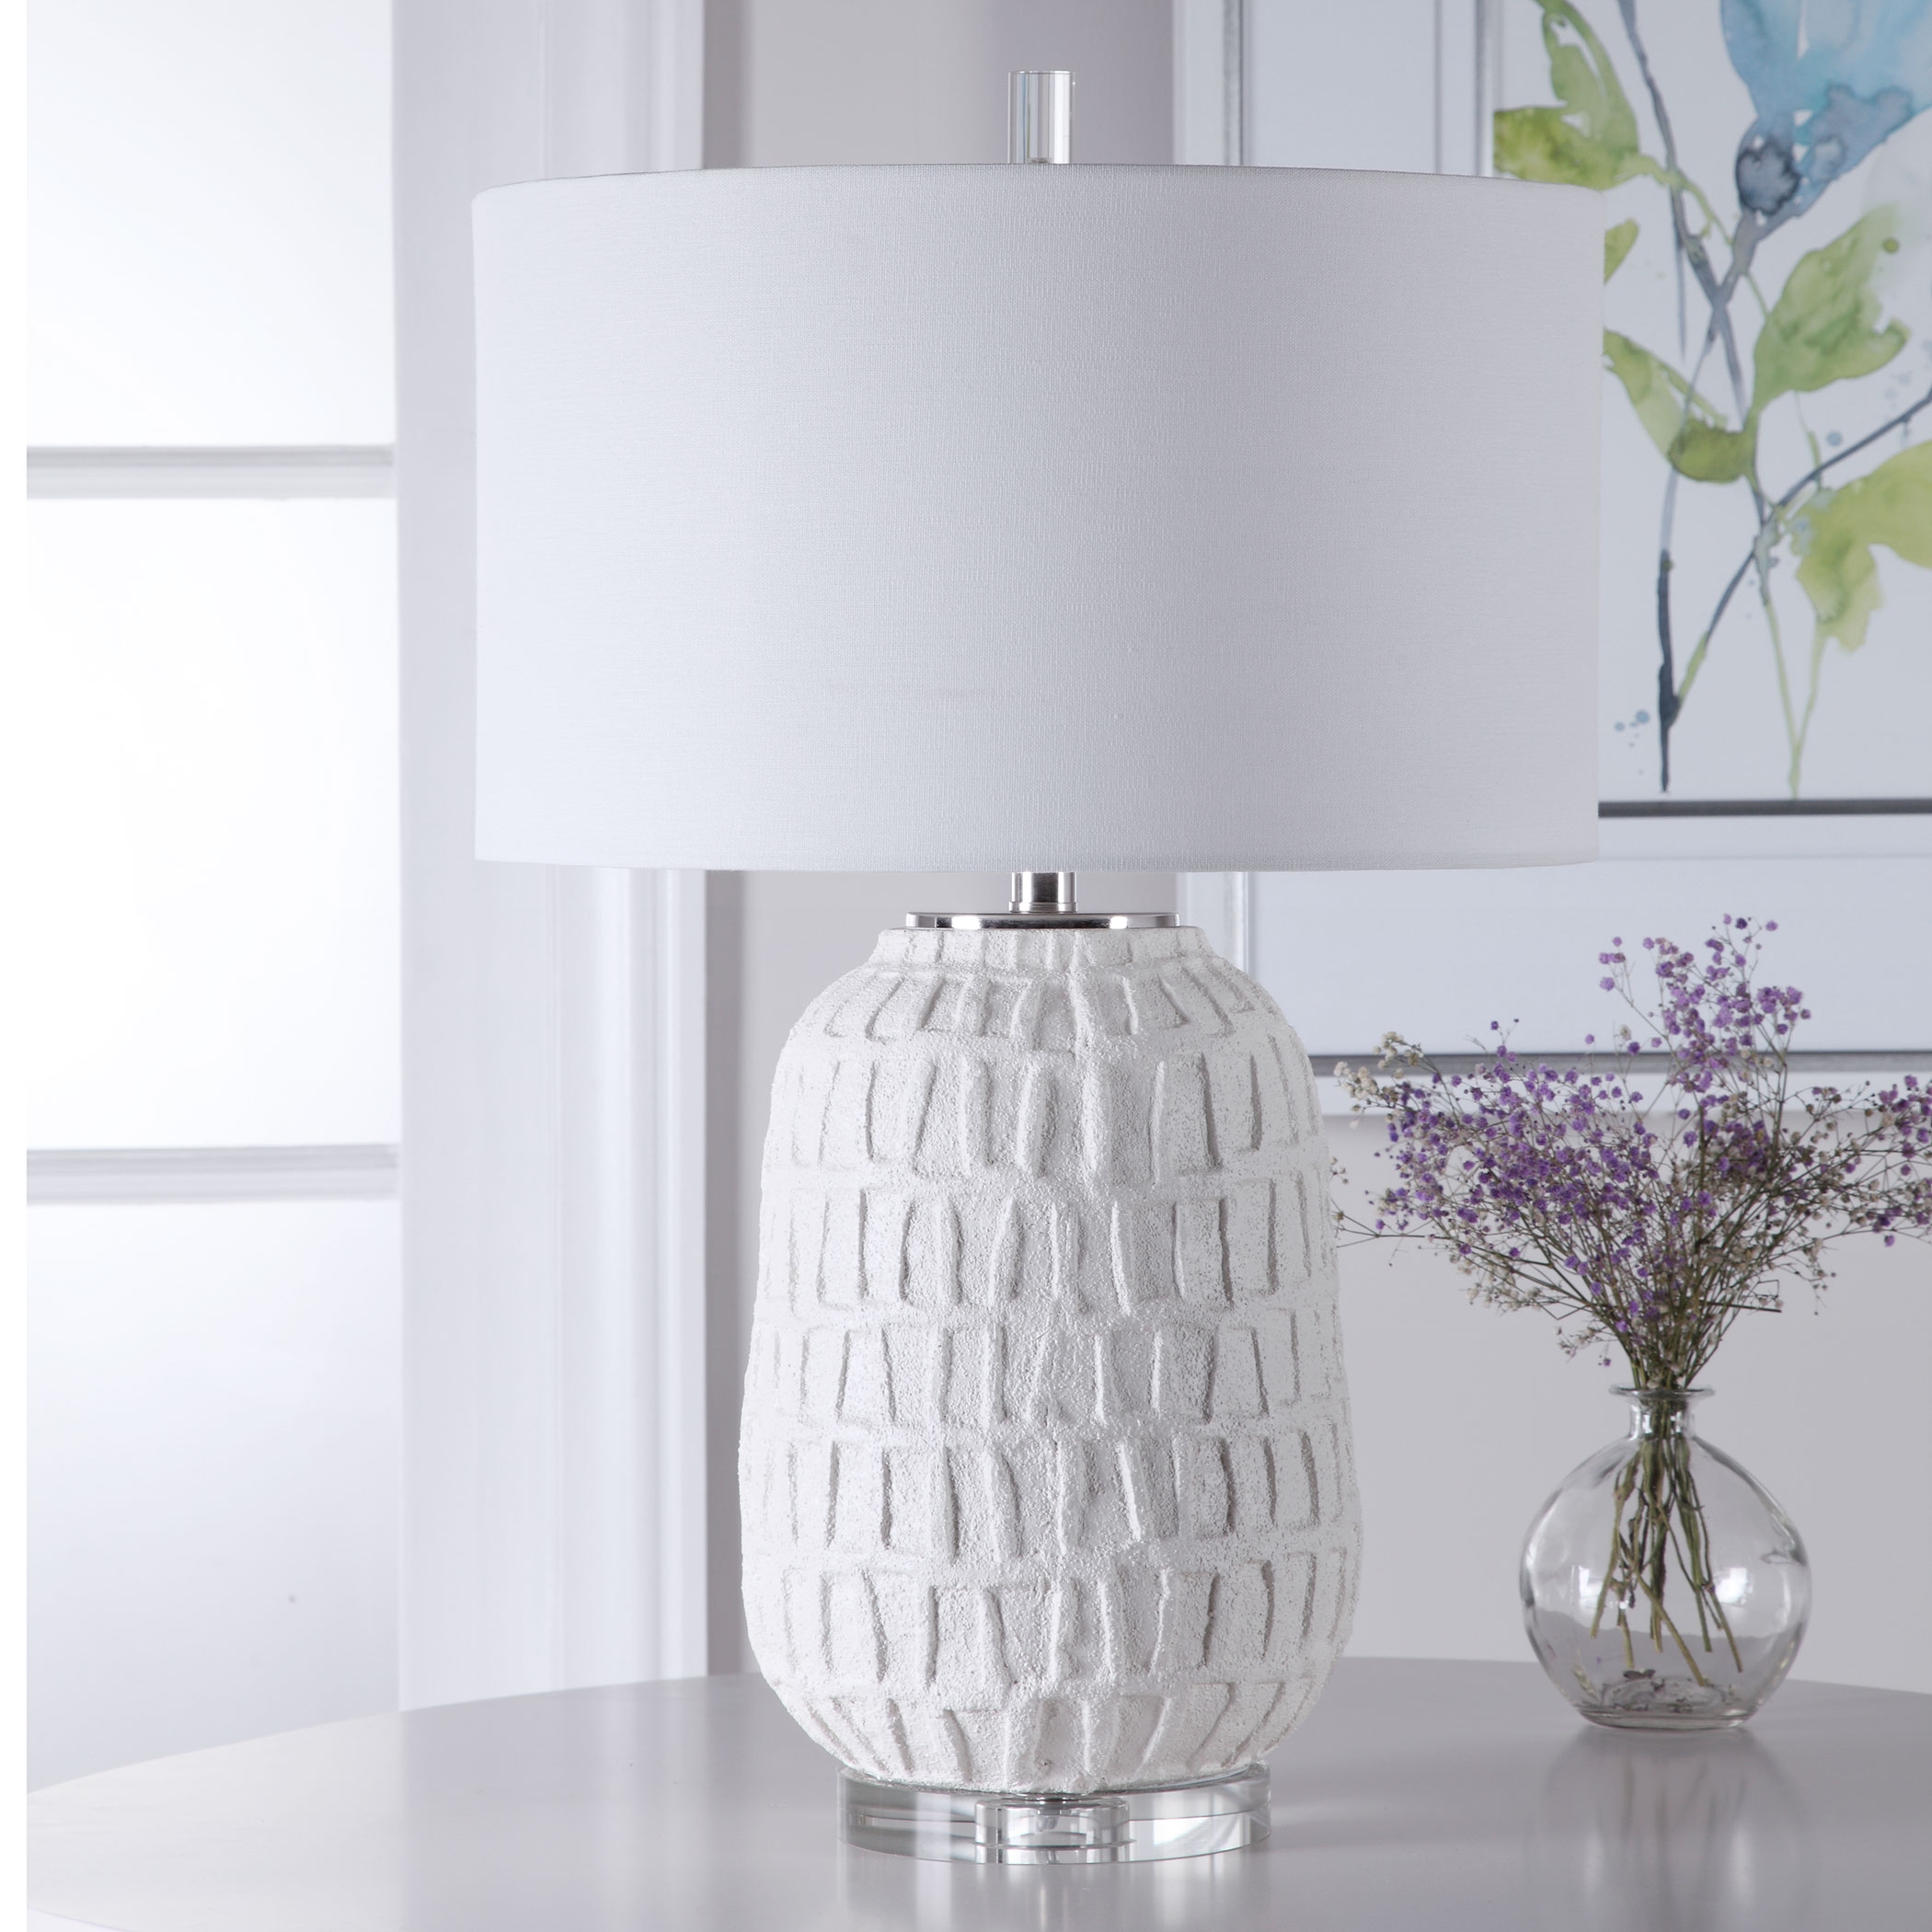 Caelina Textured White Table Lamp - Image 4